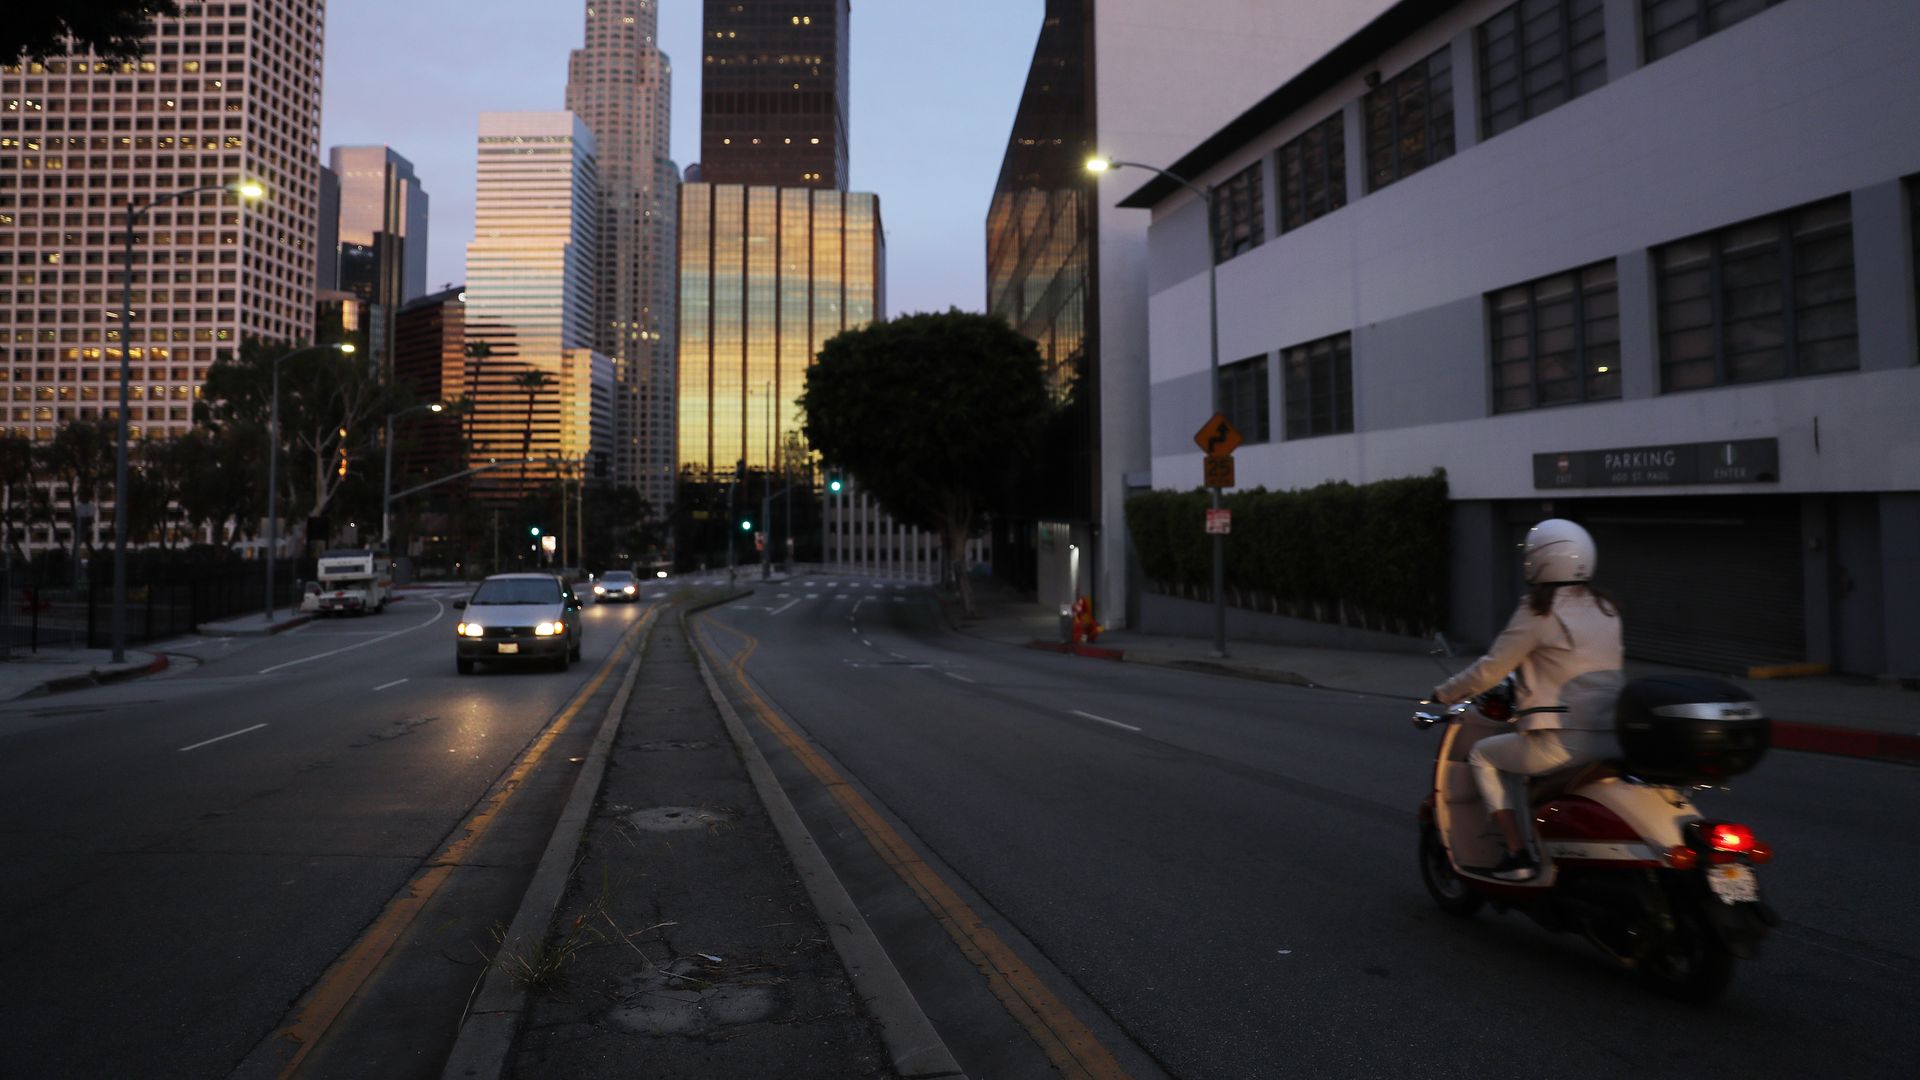 A nearly empty street in Los Angeles